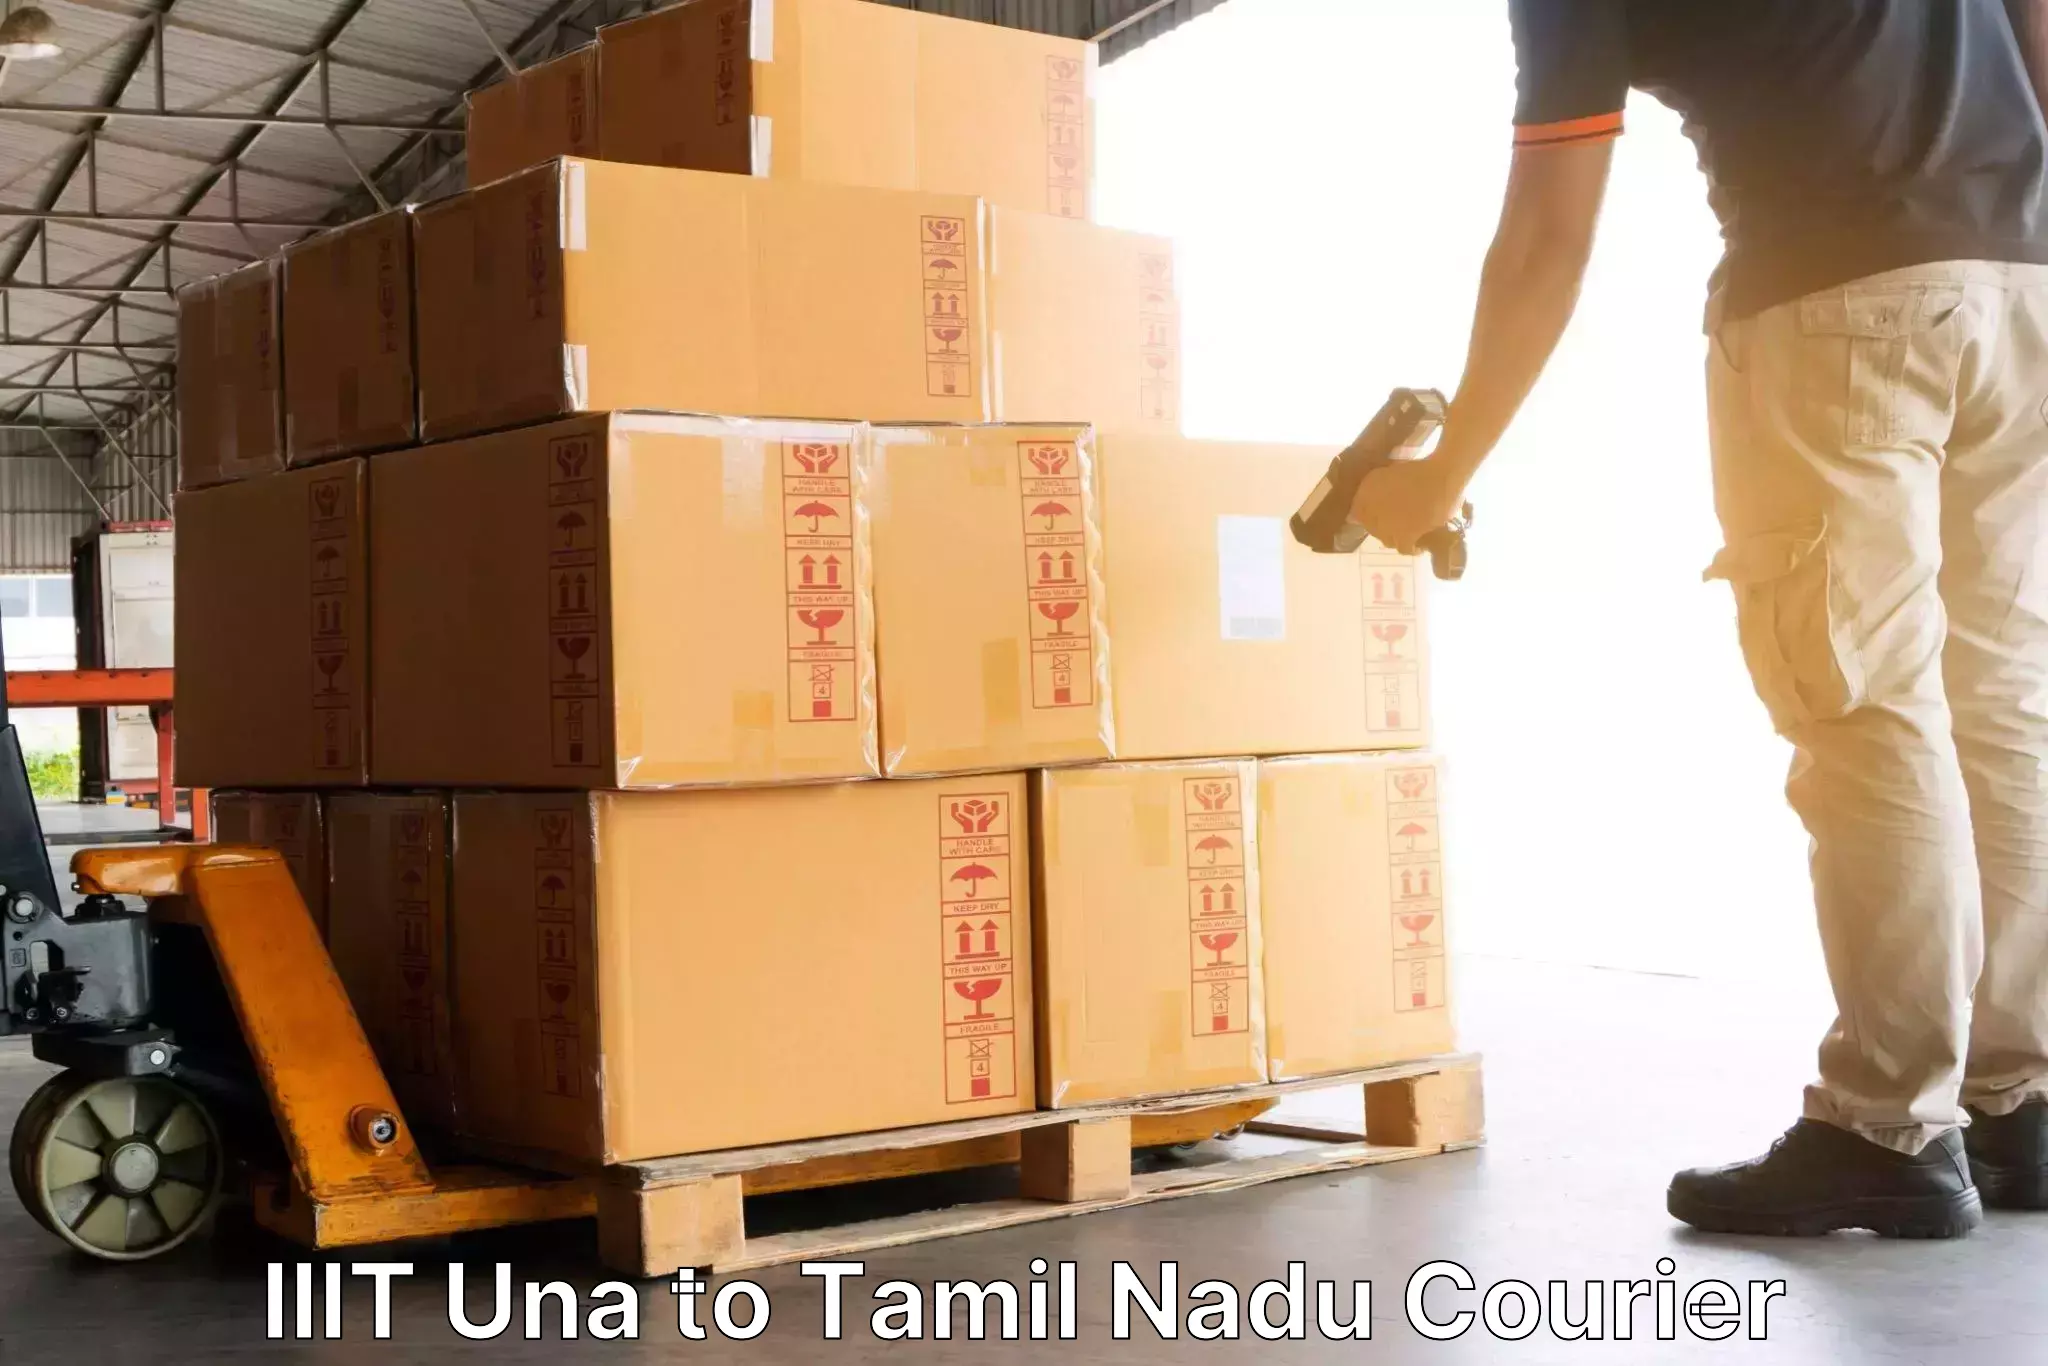 Courier service innovation in IIIT Una to Chengalpattu